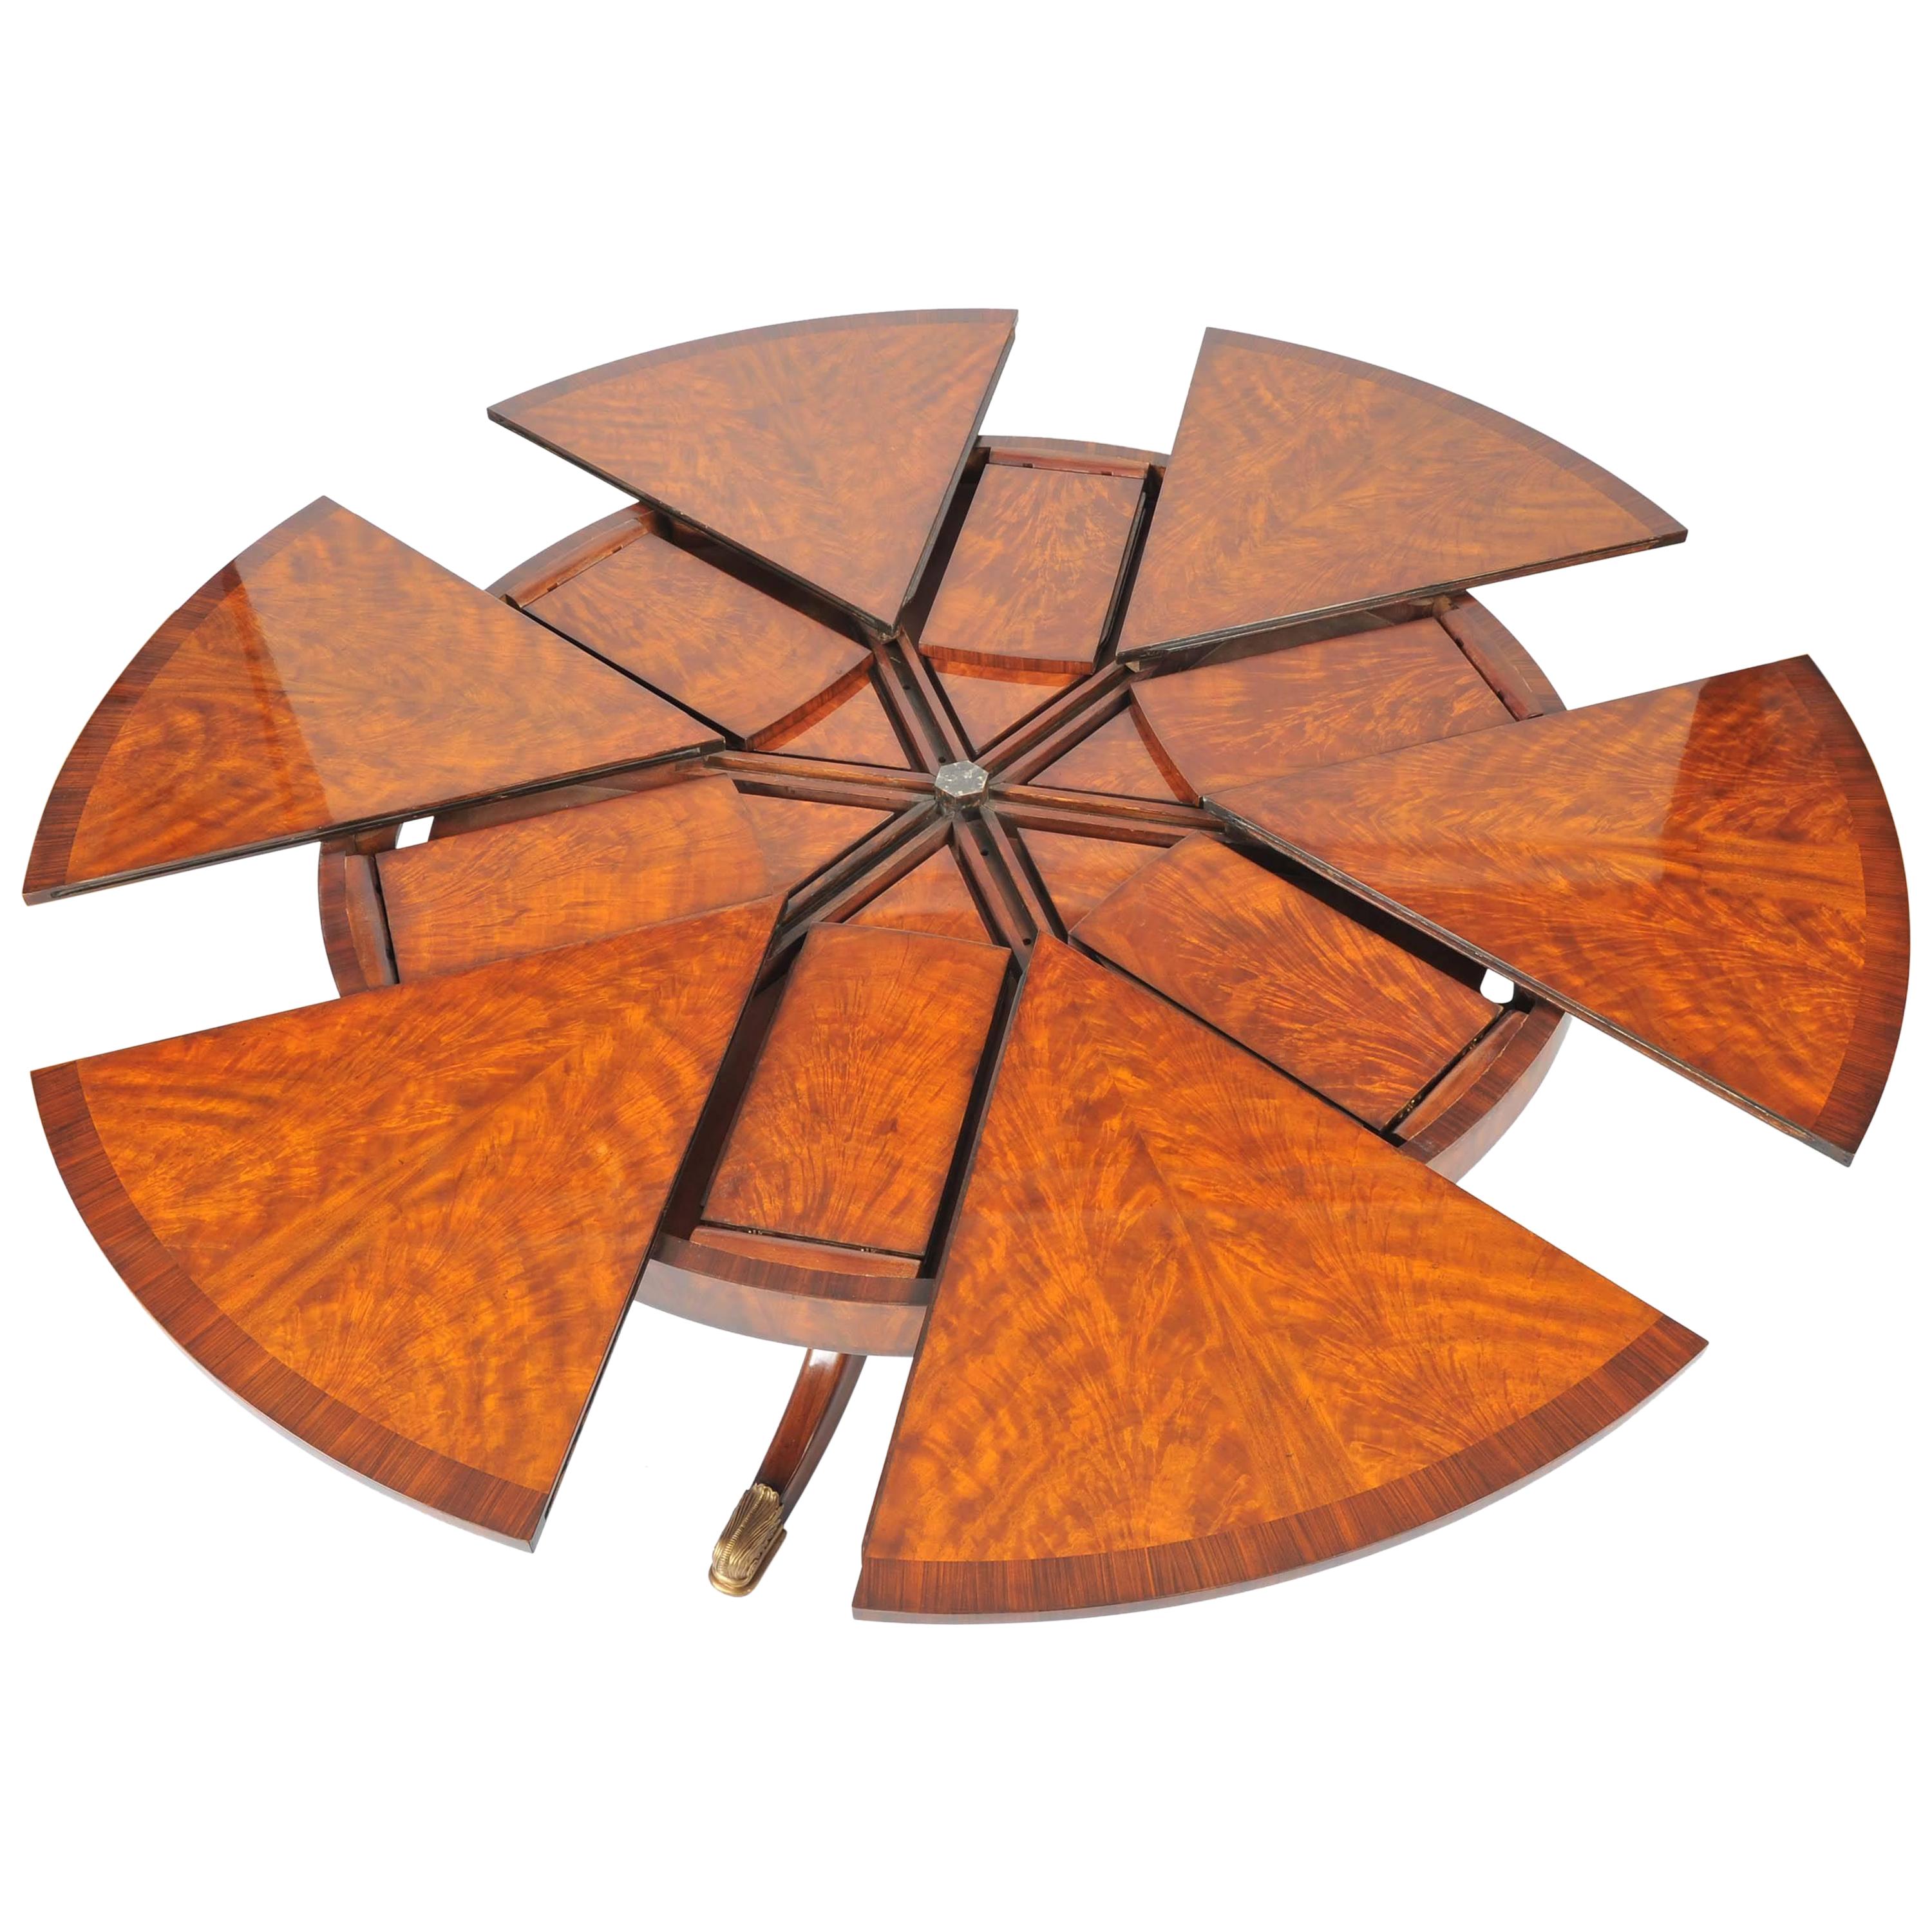 Flame Mahogany Segmented Circular Extending Table